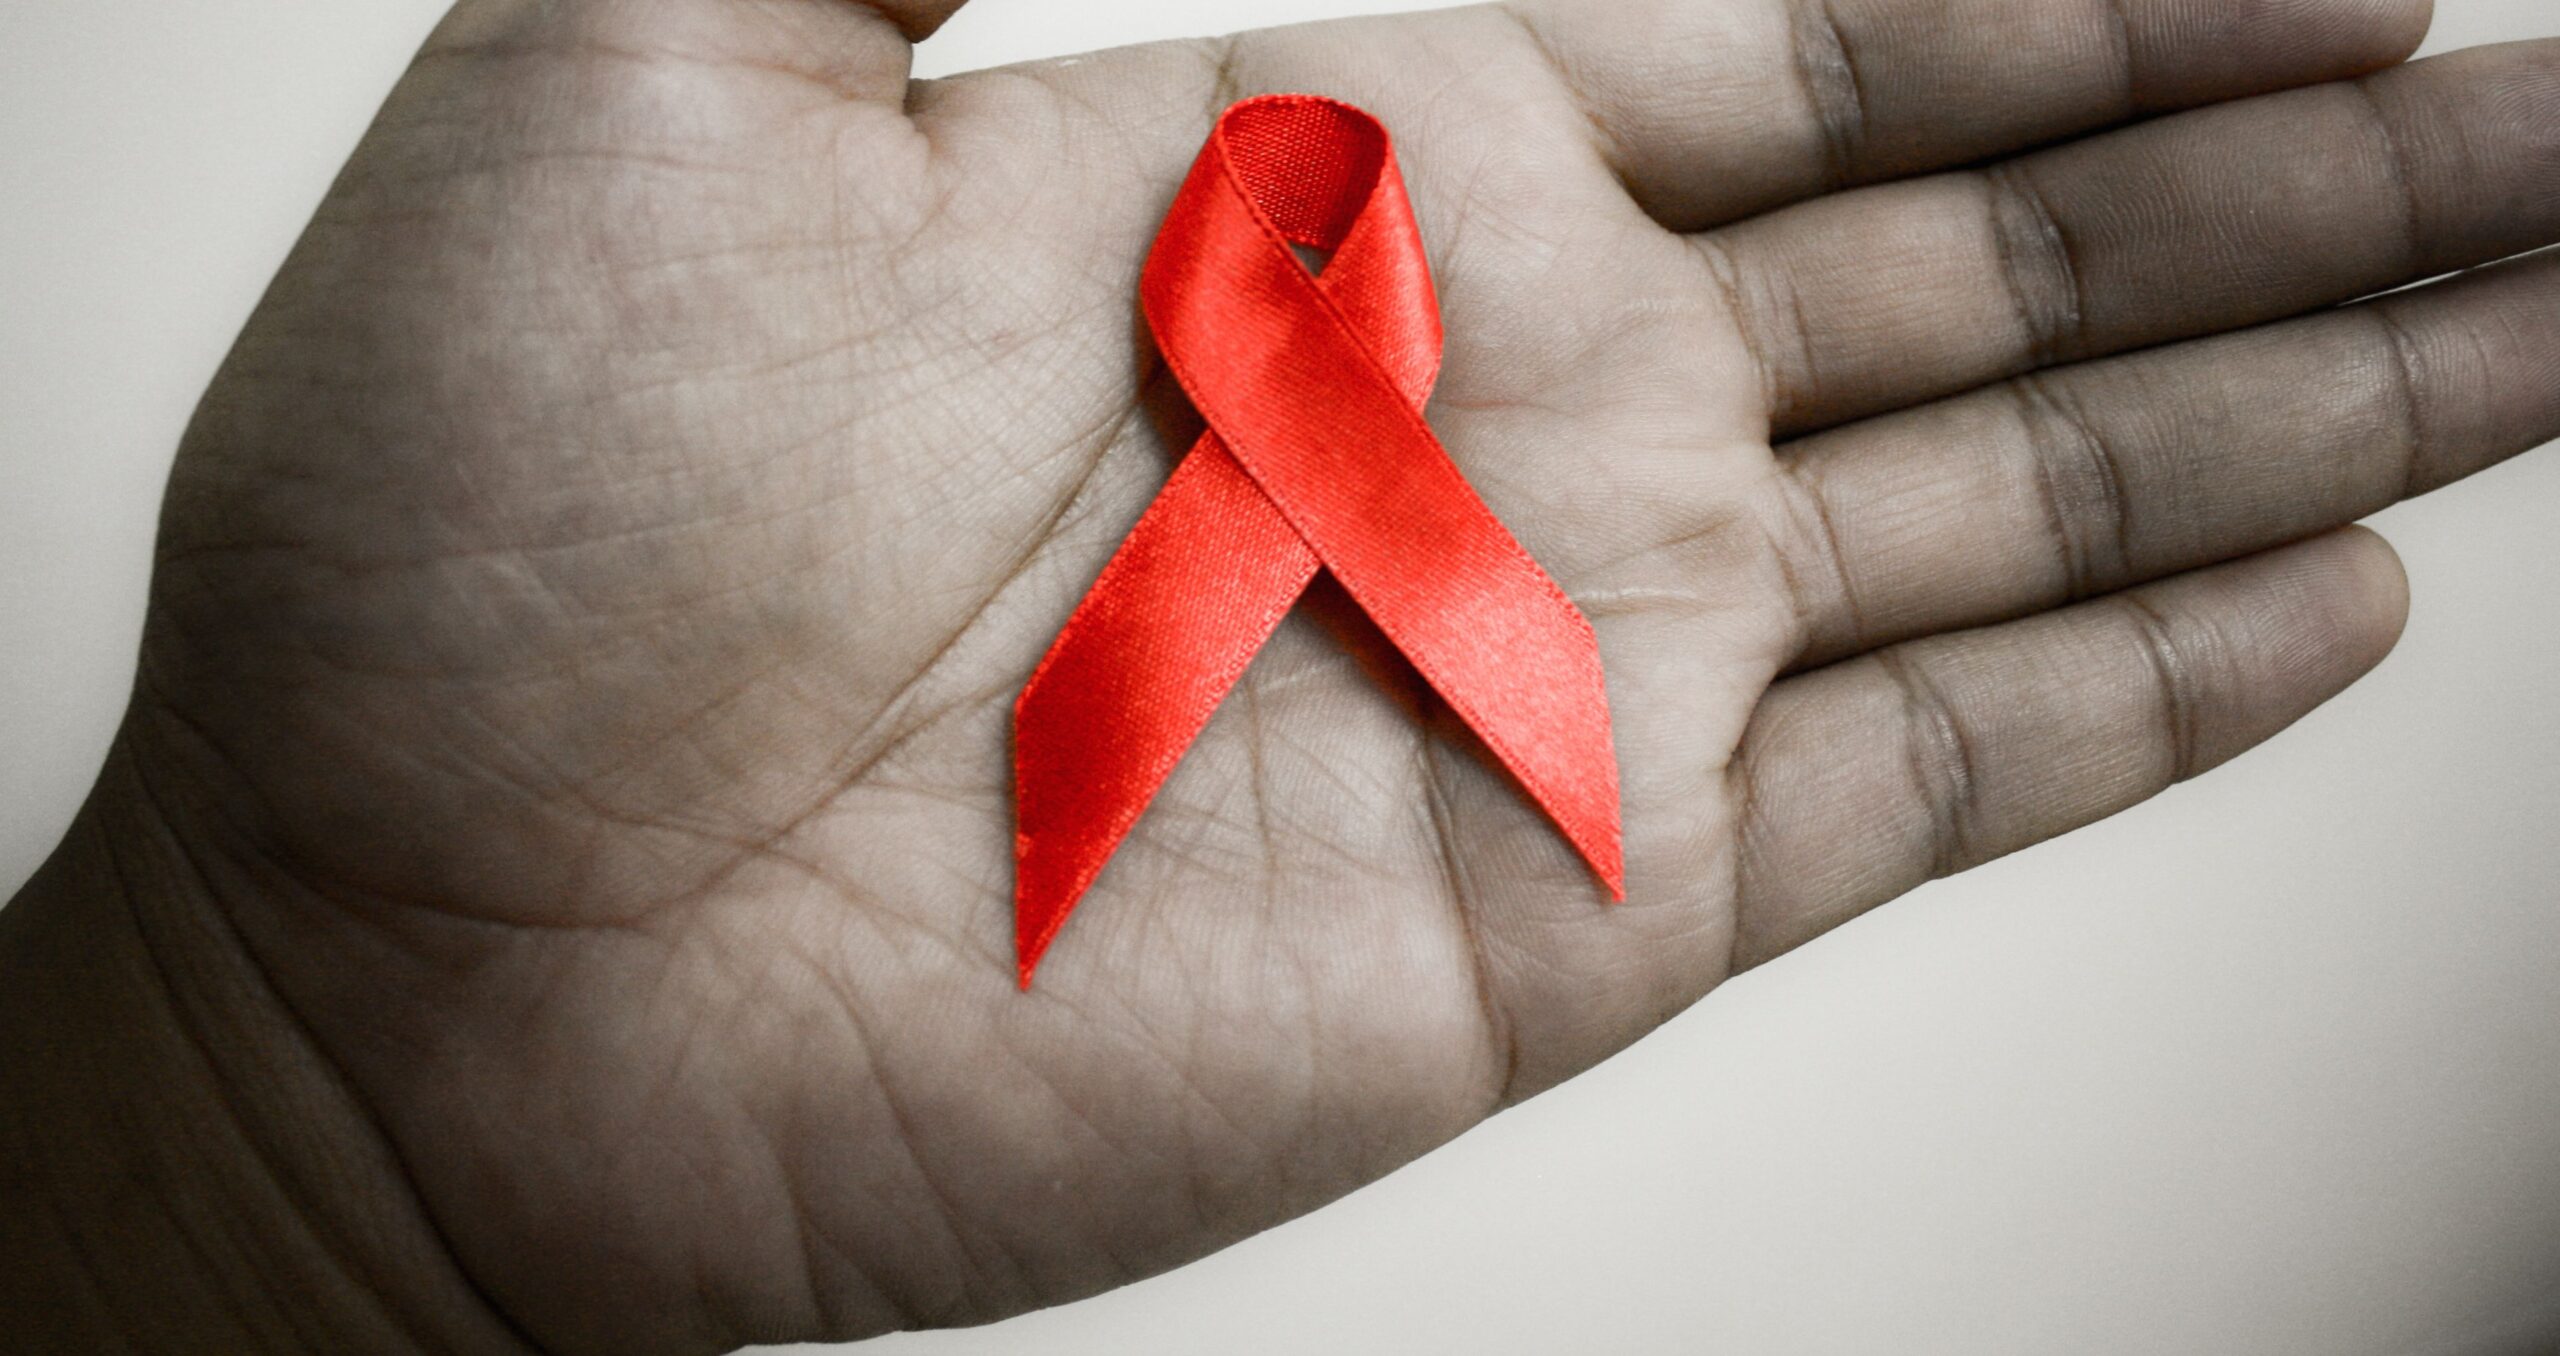 Aids: arriva il test fai da te!